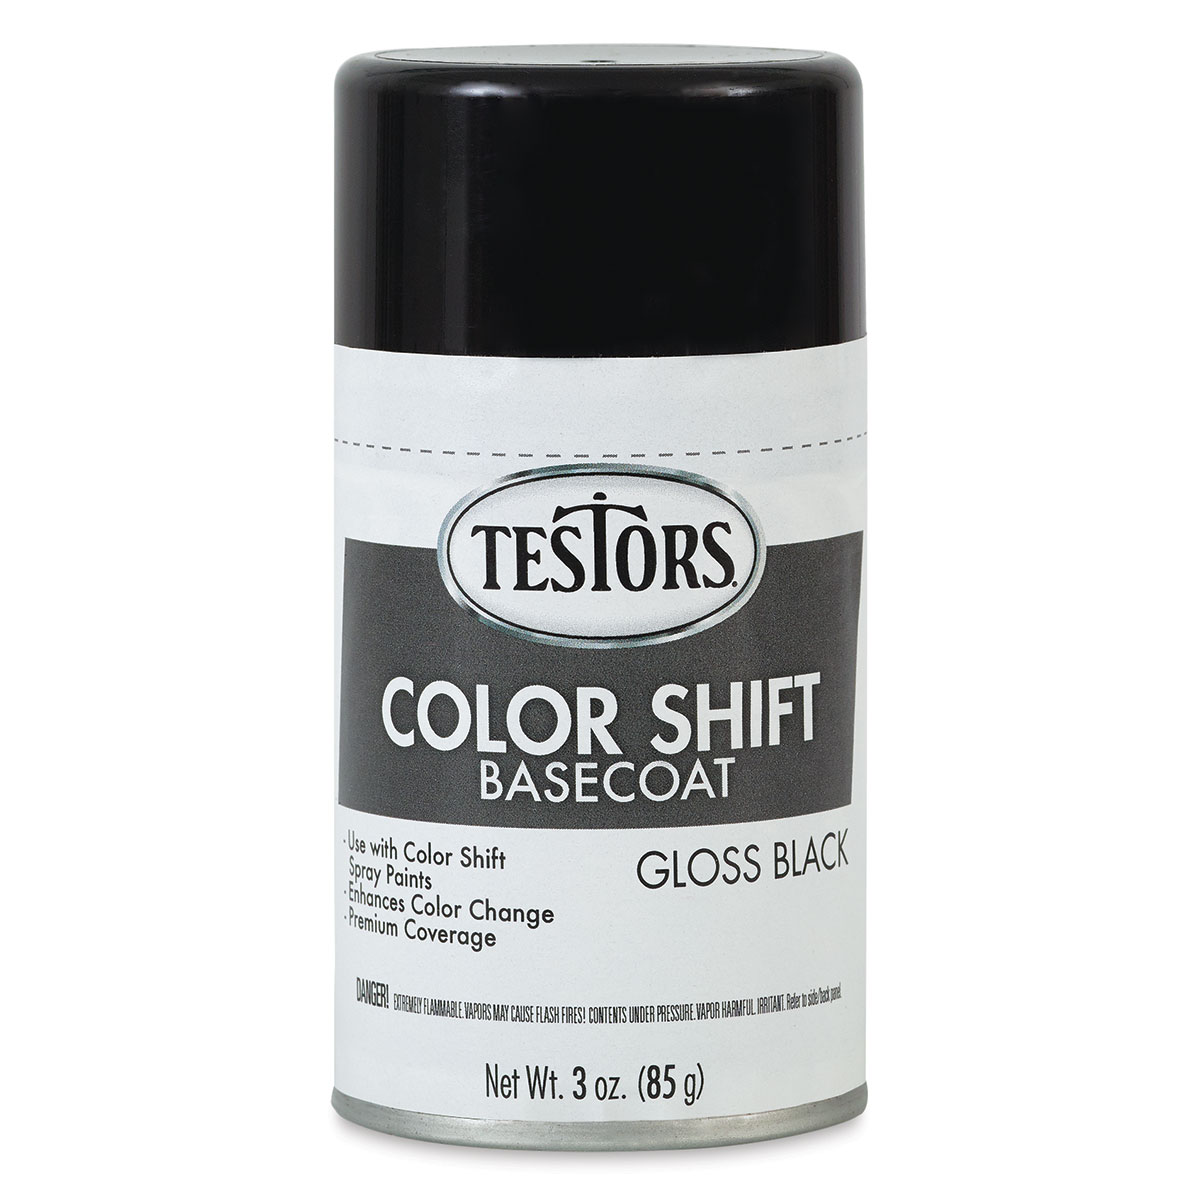 Testors Colorshift Emerald Turquoise Spray Paint 3oz